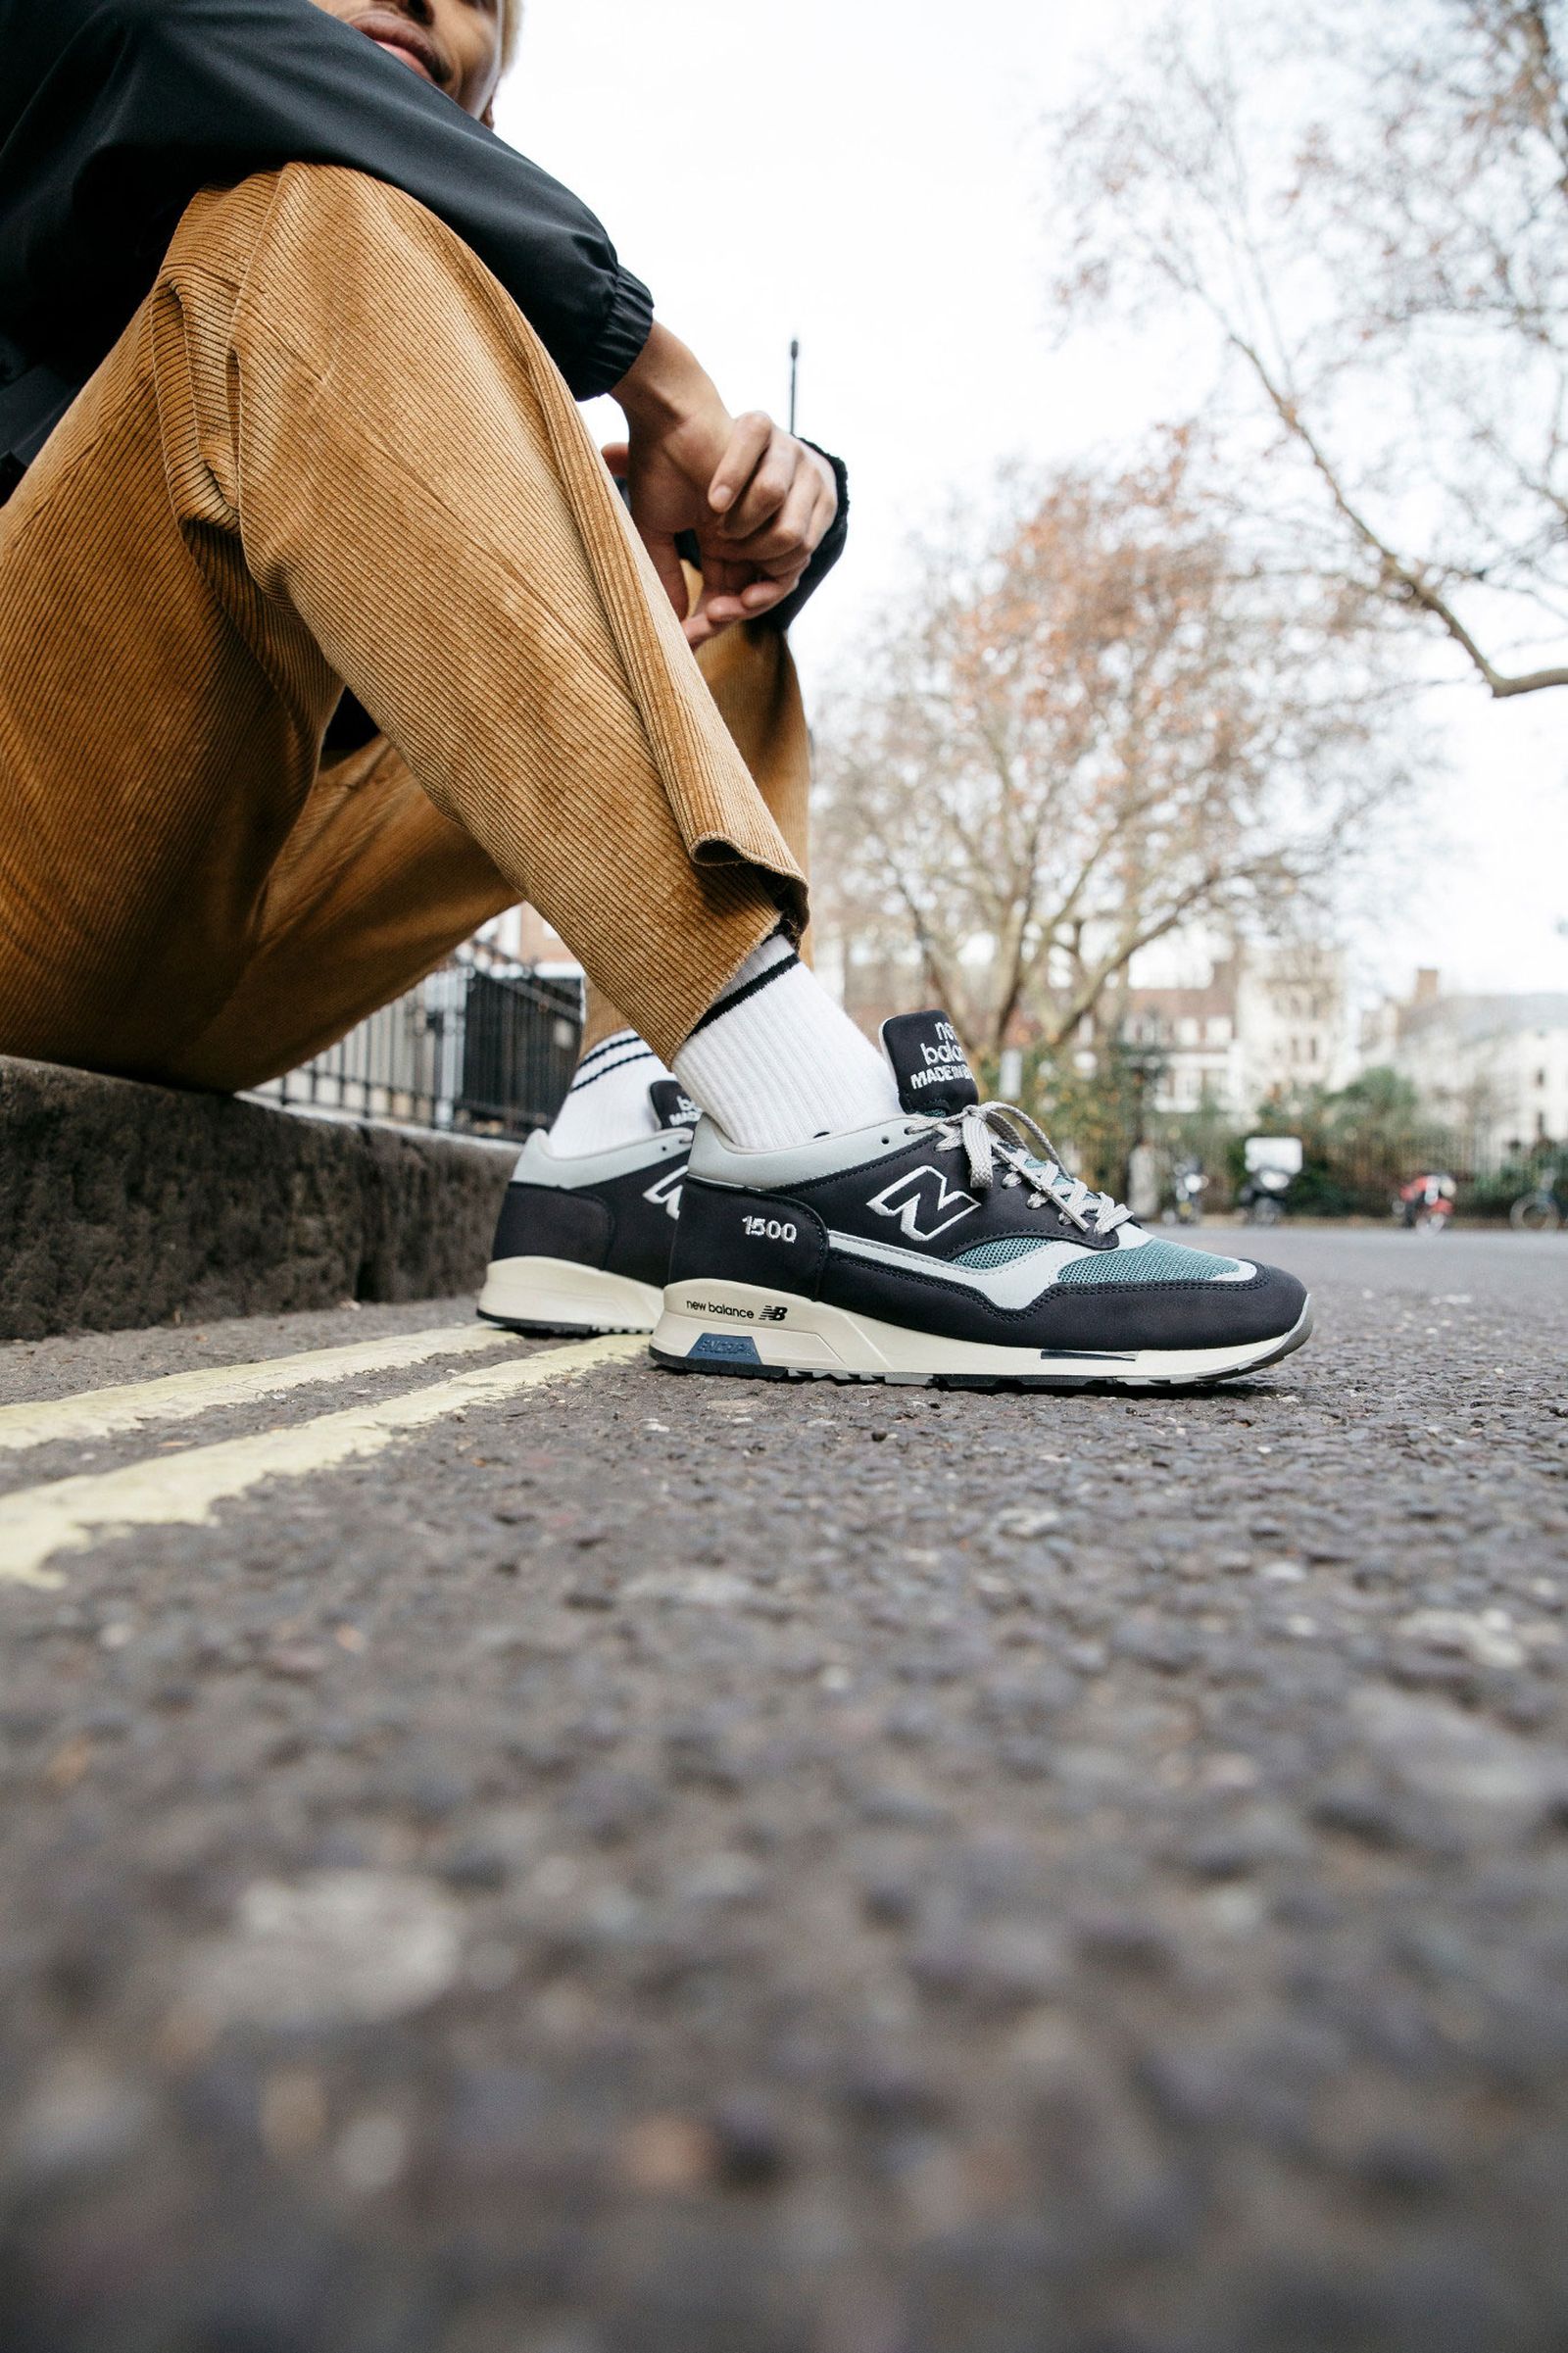 Rebaja delicado Pef EXCLUSIVE: New Balance Unveils Their Made-in-UK Sneaker Range